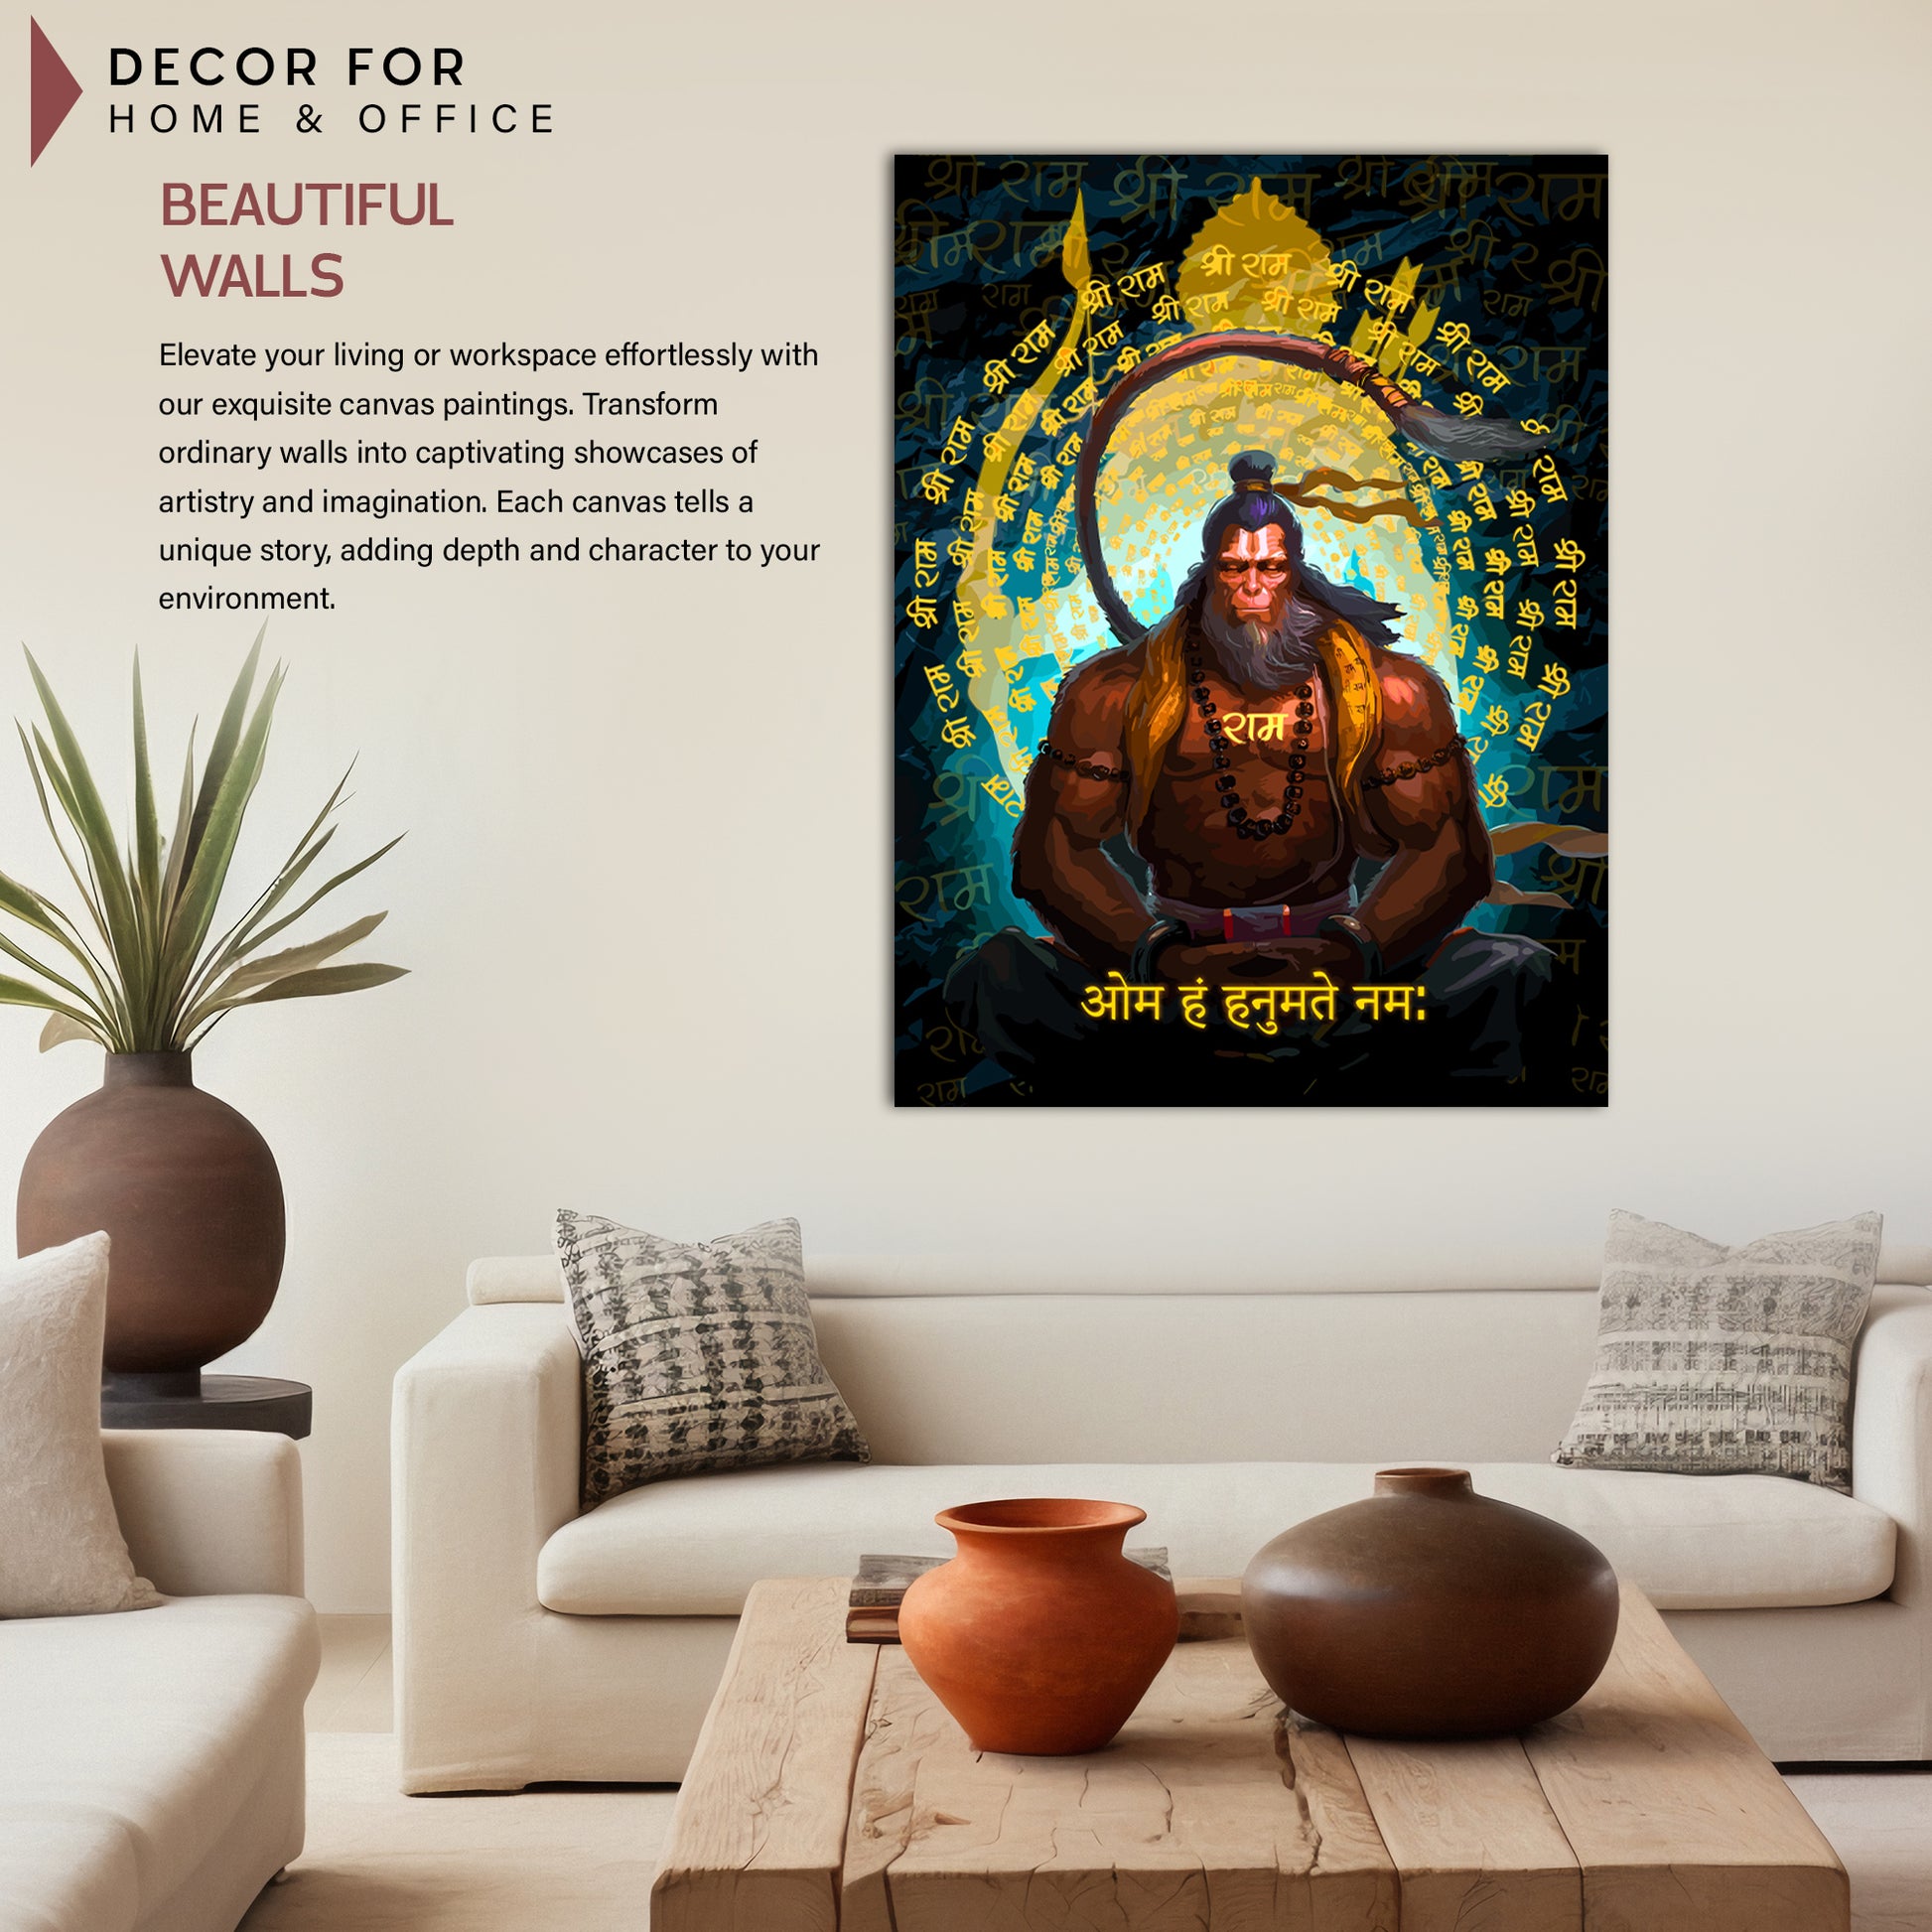 Deities and Spiritual Collection. Wall art and unique spiritual